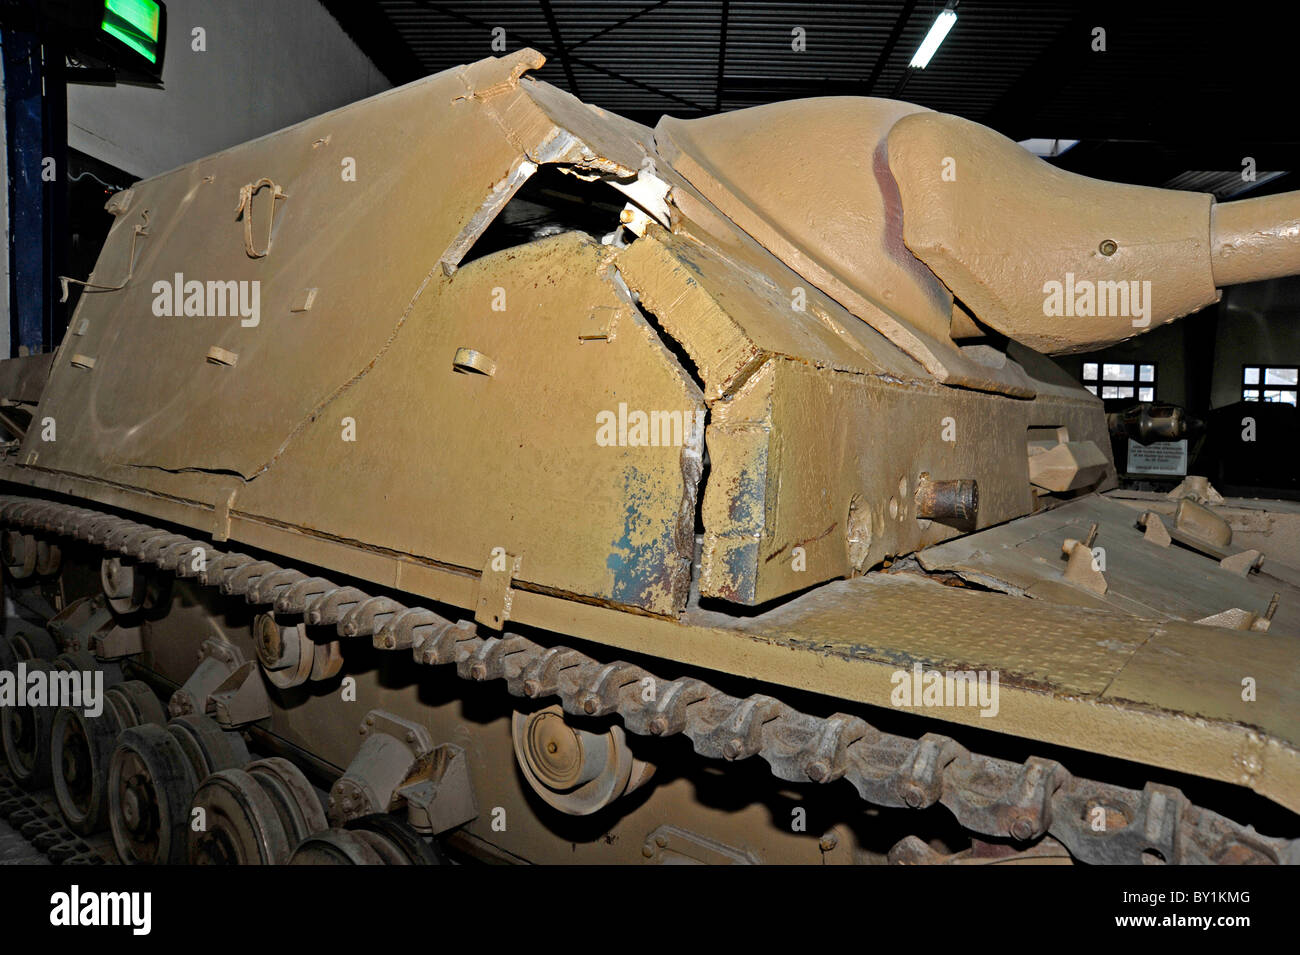 https://c8.alamy.com/comp/BY1KMG/ww2-german-tank-display-at-saumur-france-BY1KMG.jpg